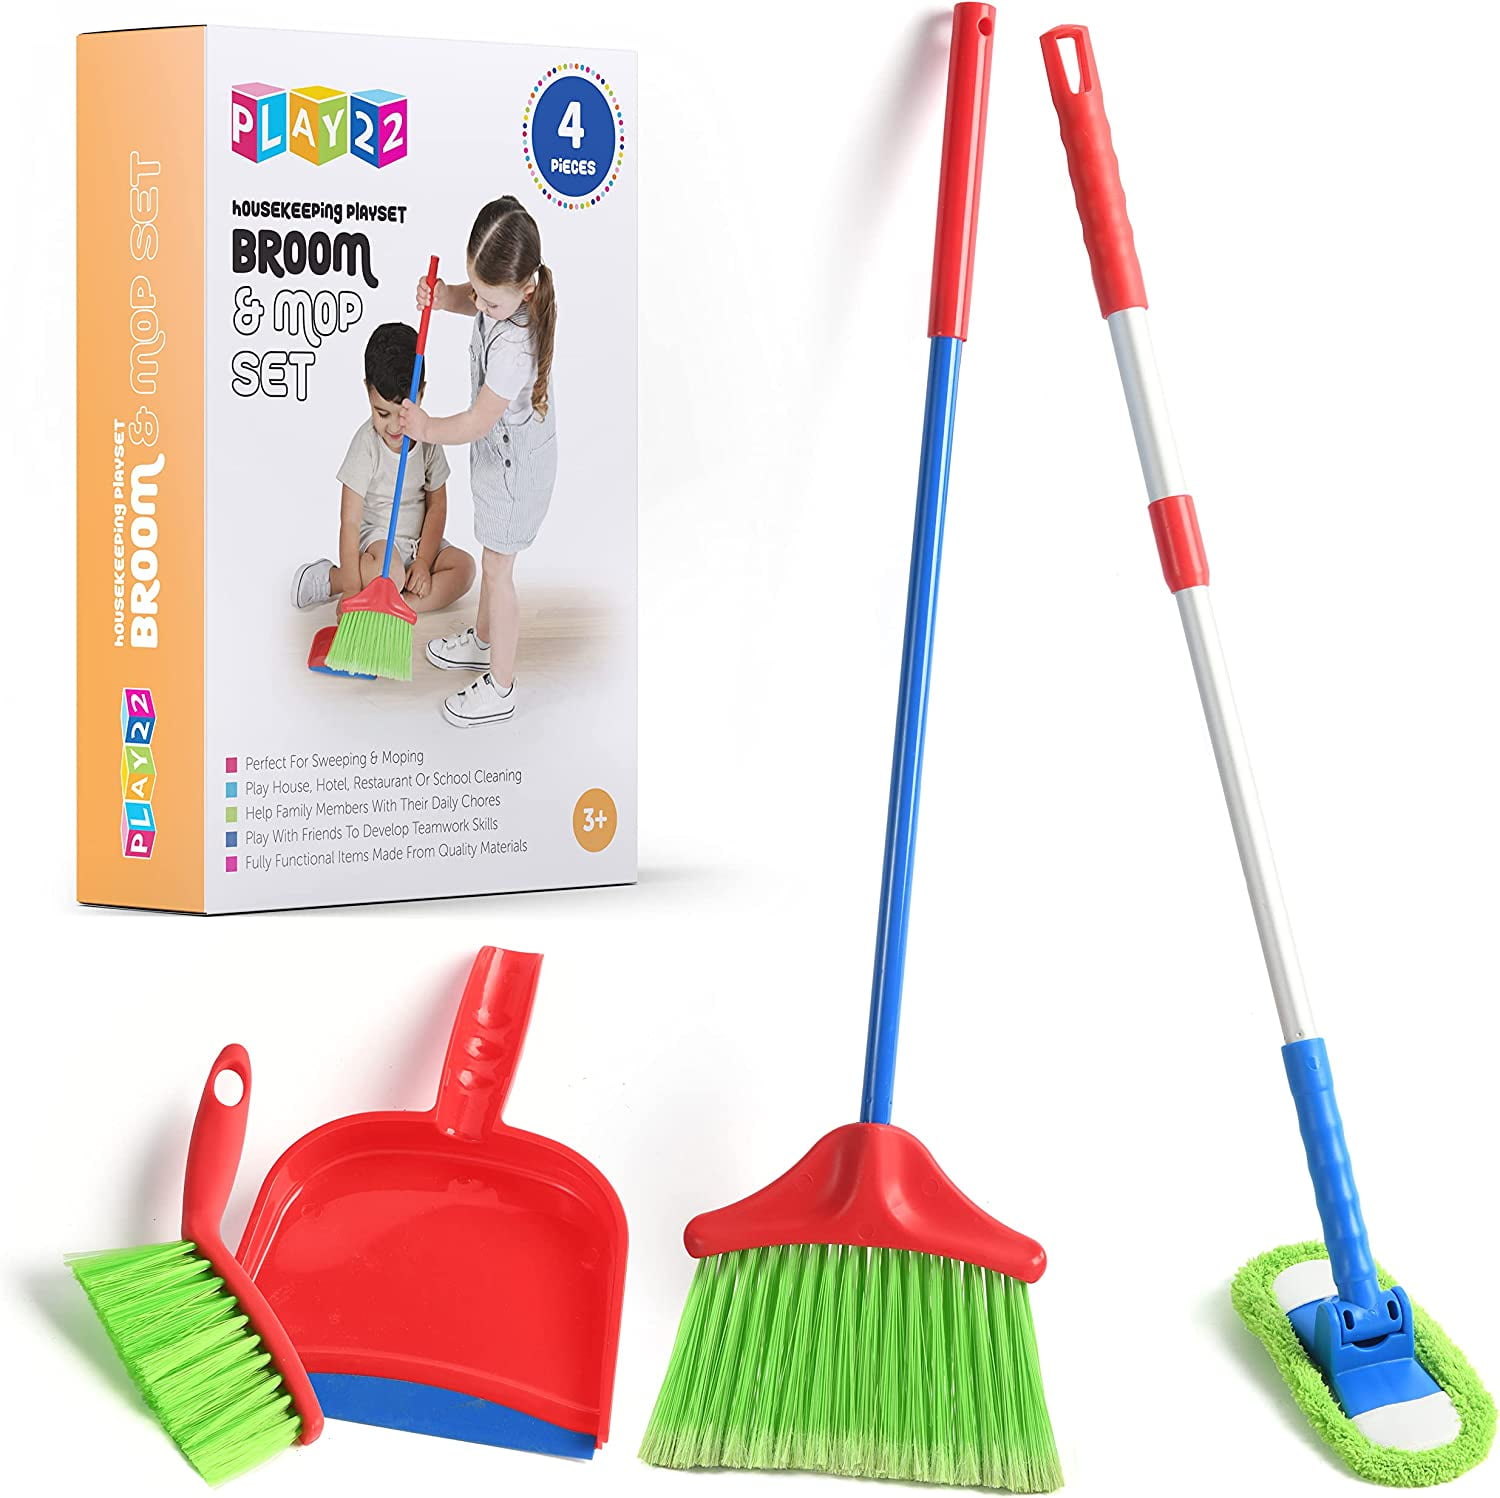 Xifando Kid's Housekeeping Cleaning Tools Set-5pcs,Include  Mop,Broom,Dust-pan,Brush,Towel